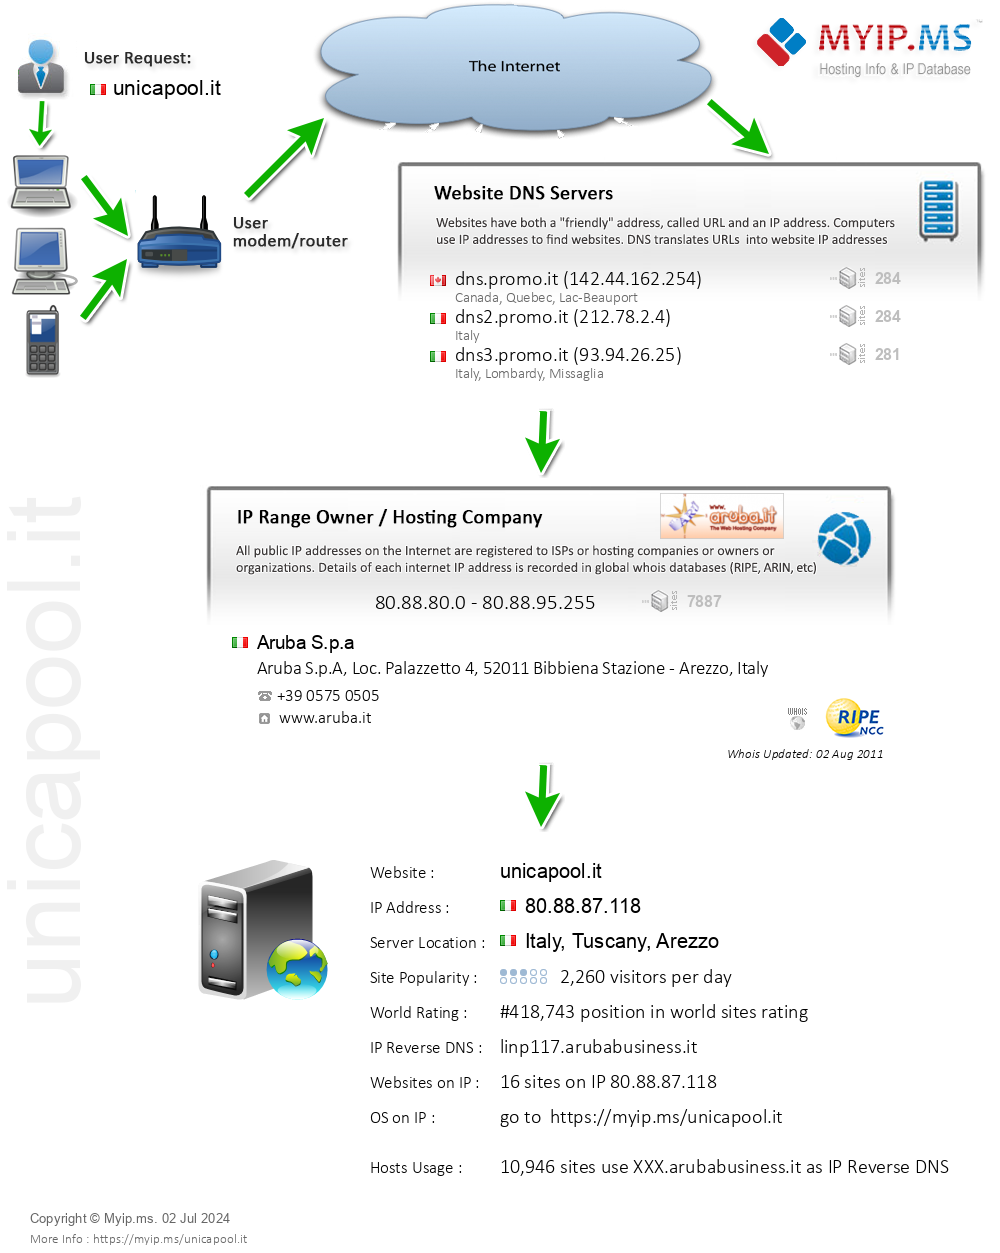 Unicapool.it - Website Hosting Visual IP Diagram